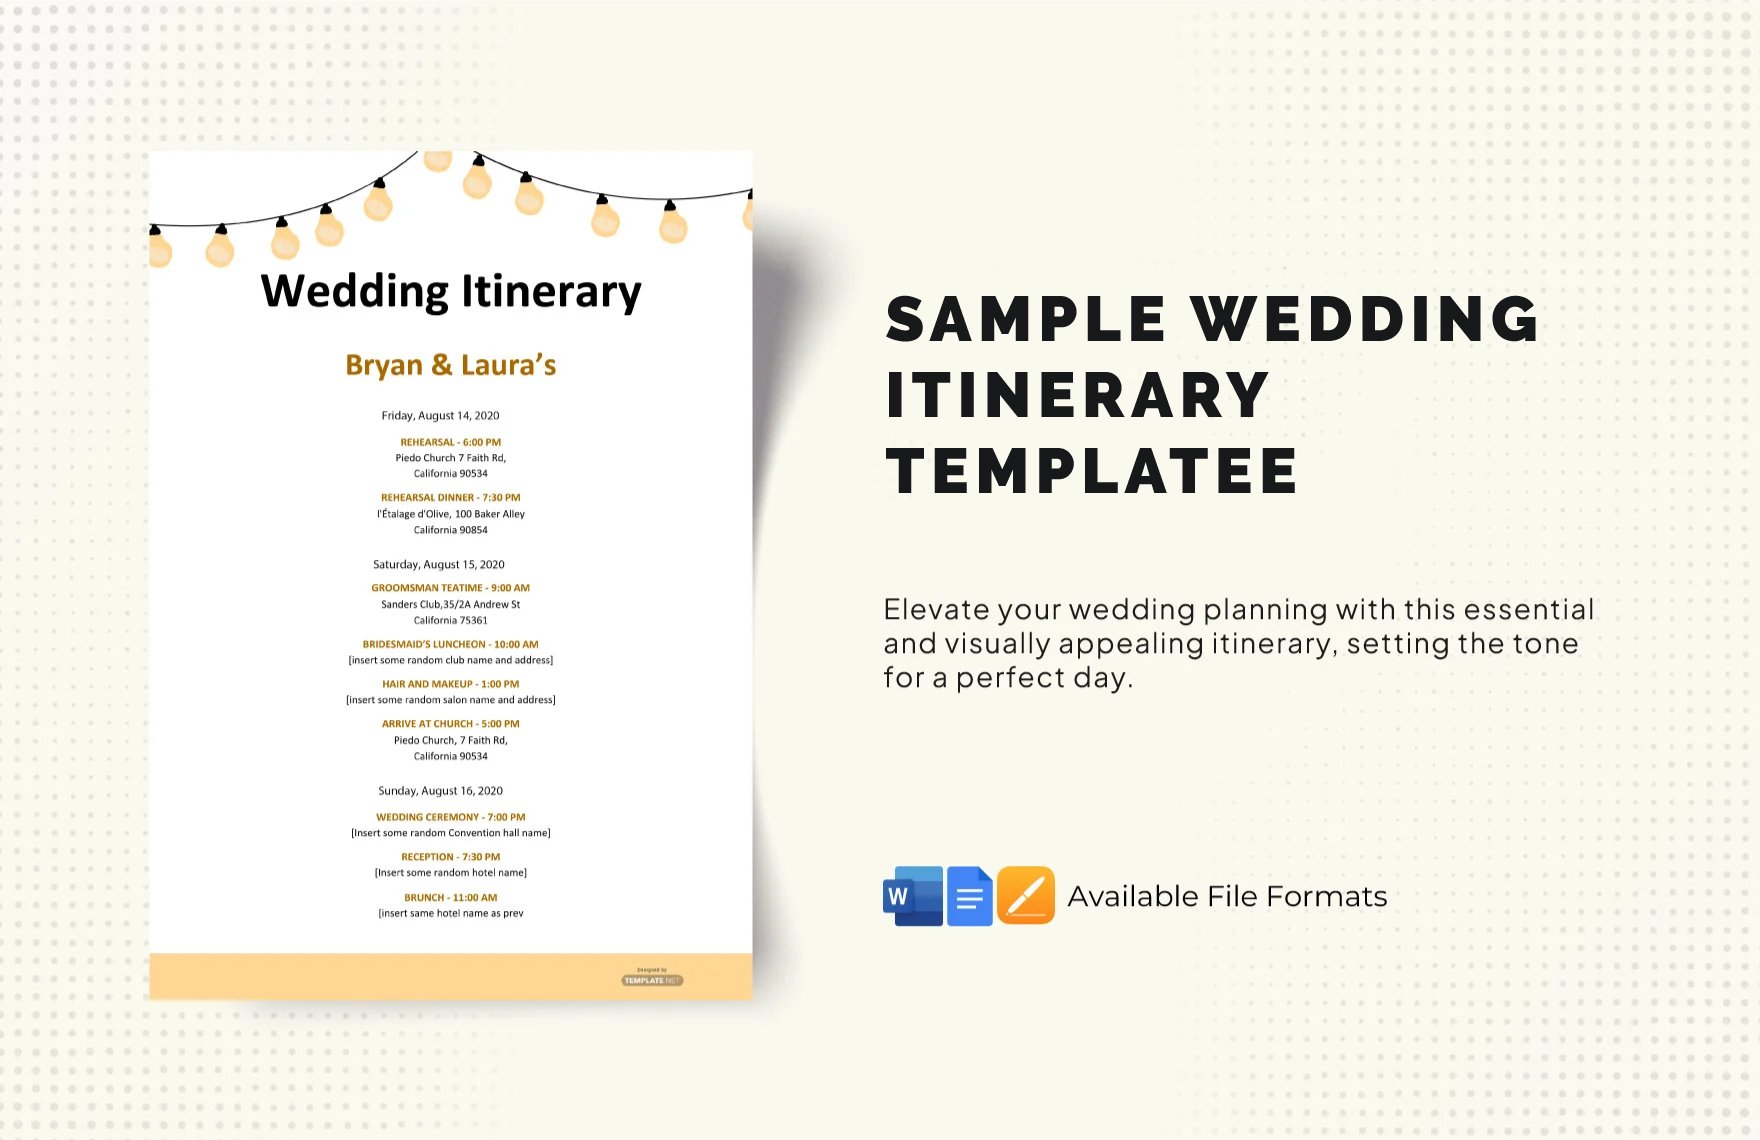 Sample Wedding Itinerary Template